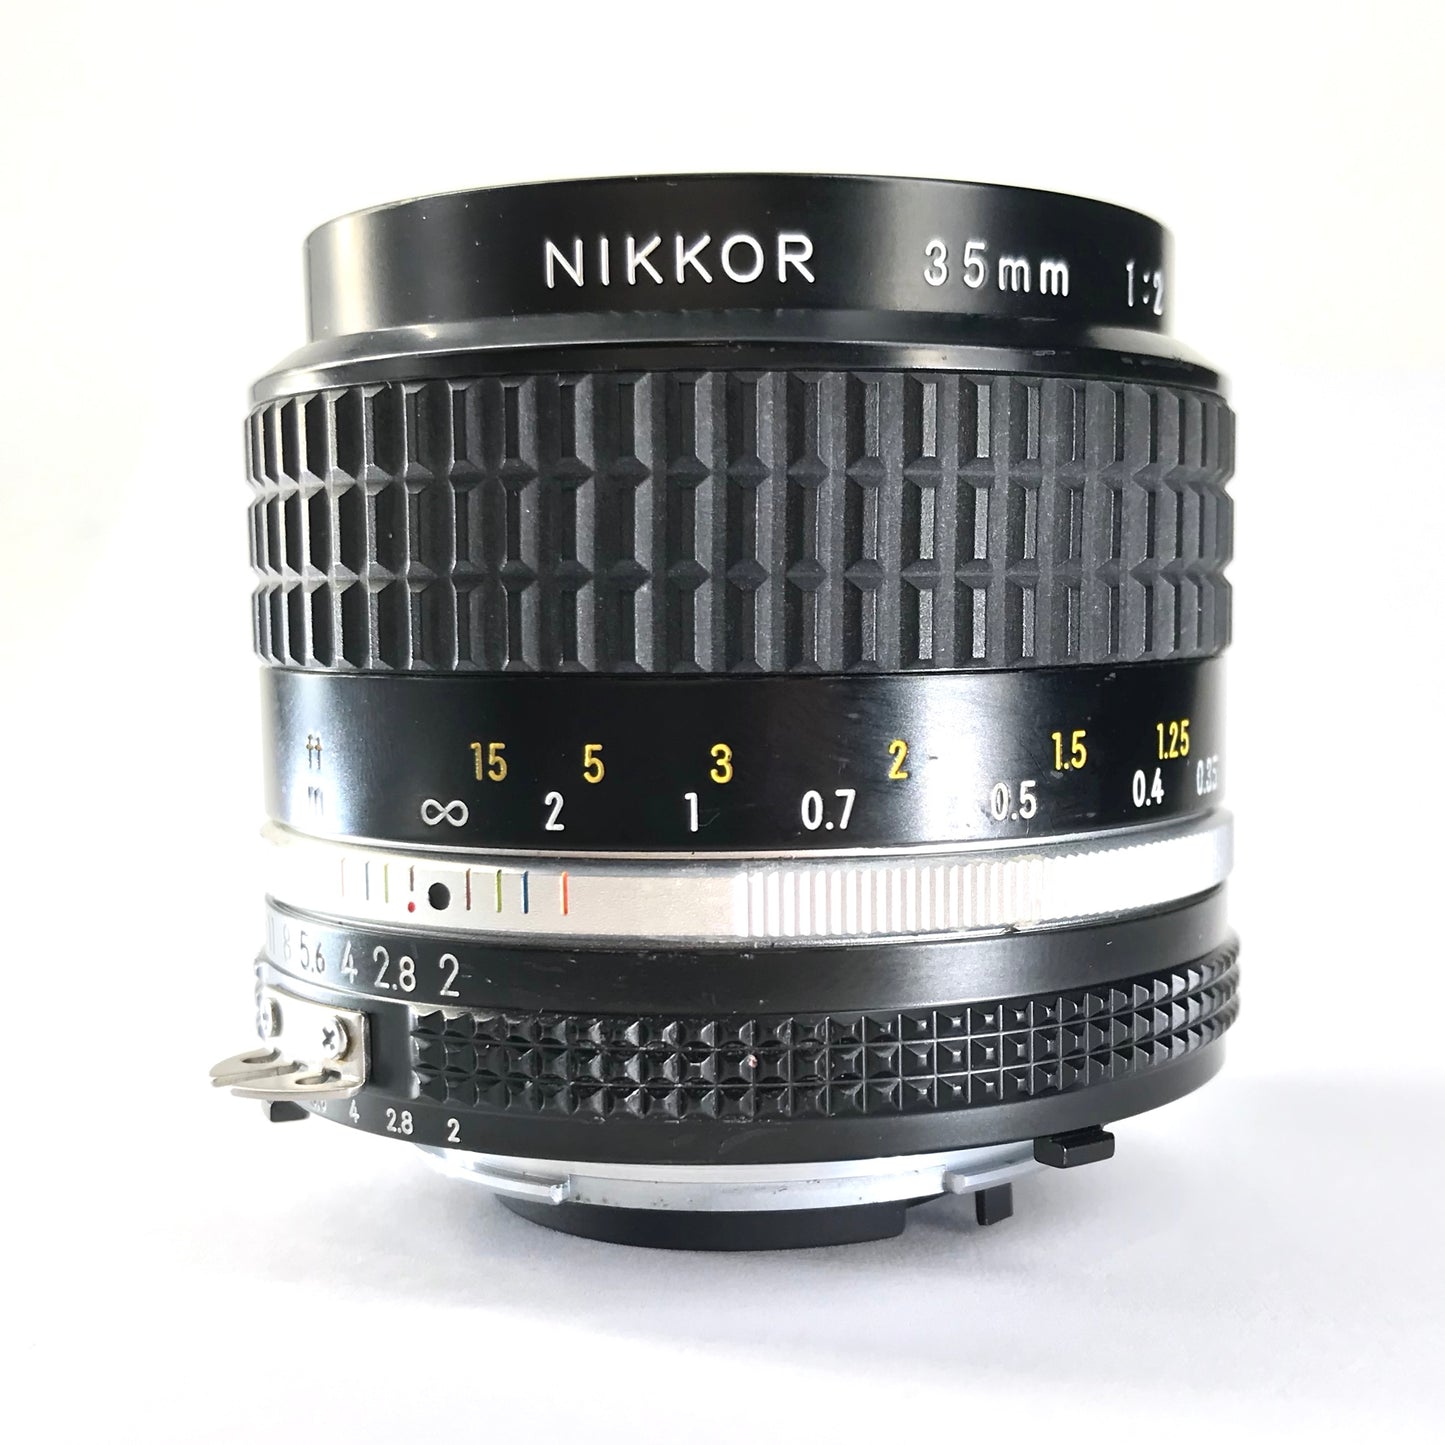 Nikon 35mm f2 AIS